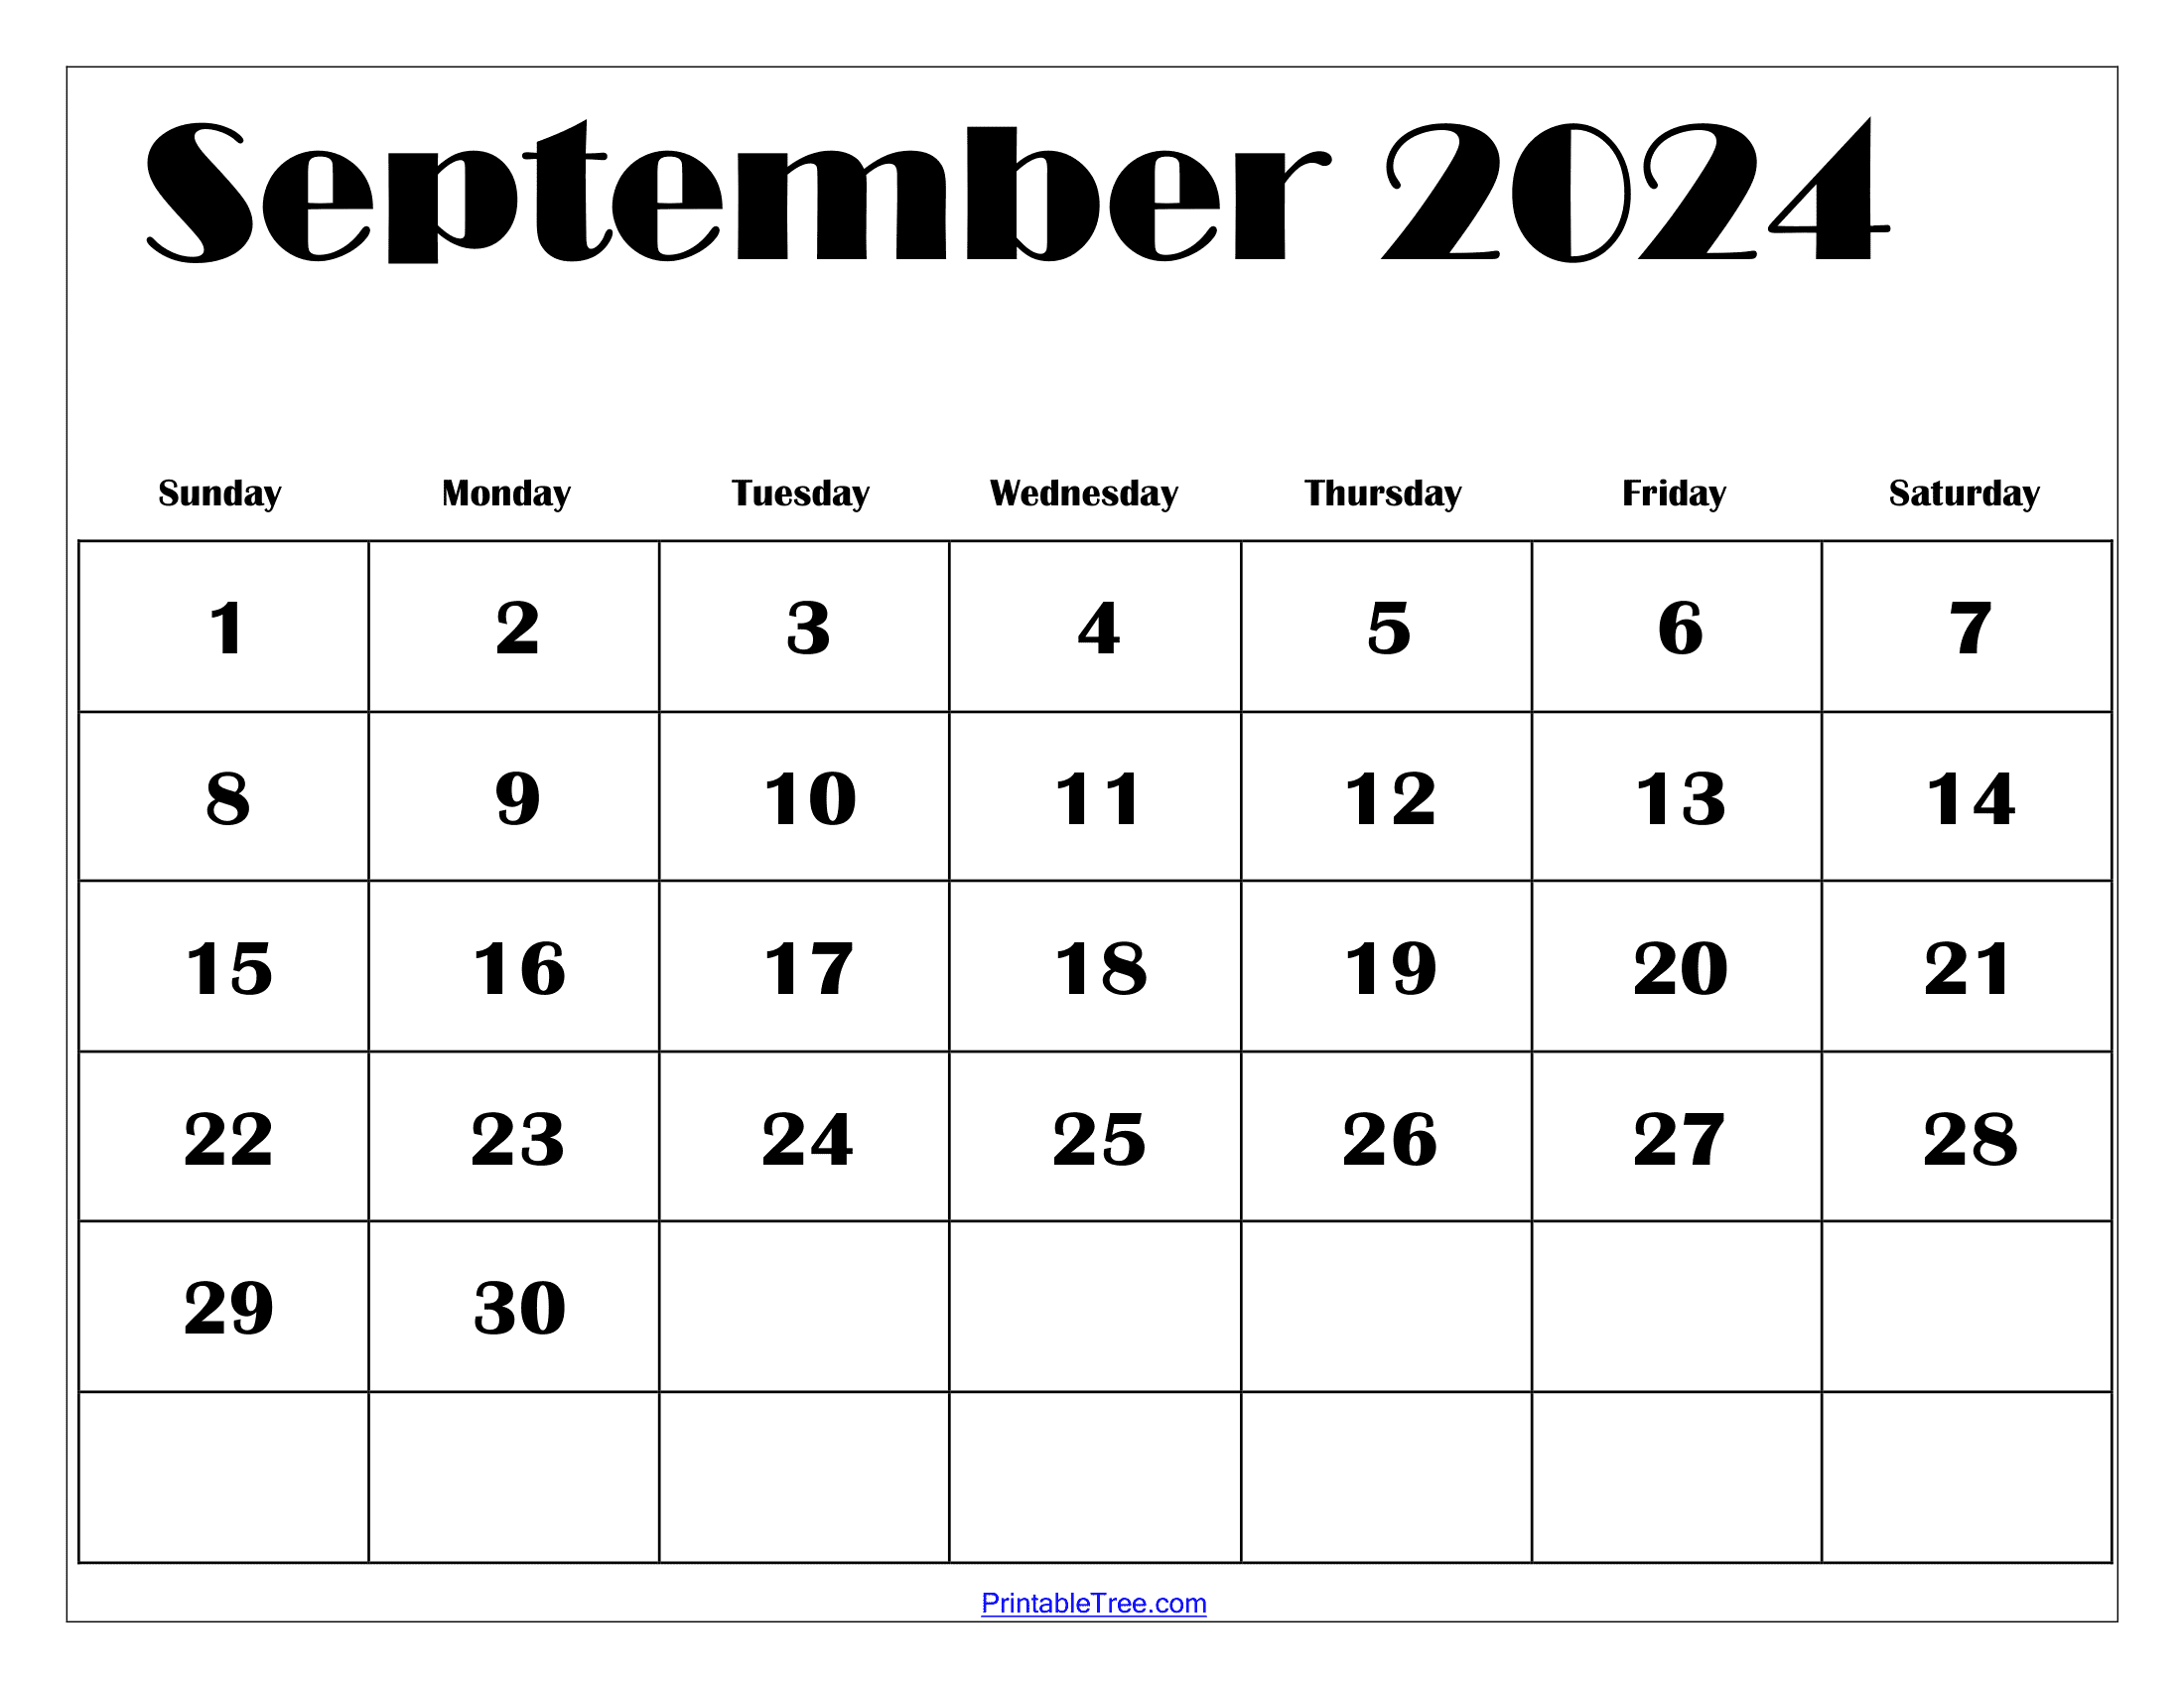 September 2024 Calendar Printable Pdf With Holidays for September 2024 Printable Calendar